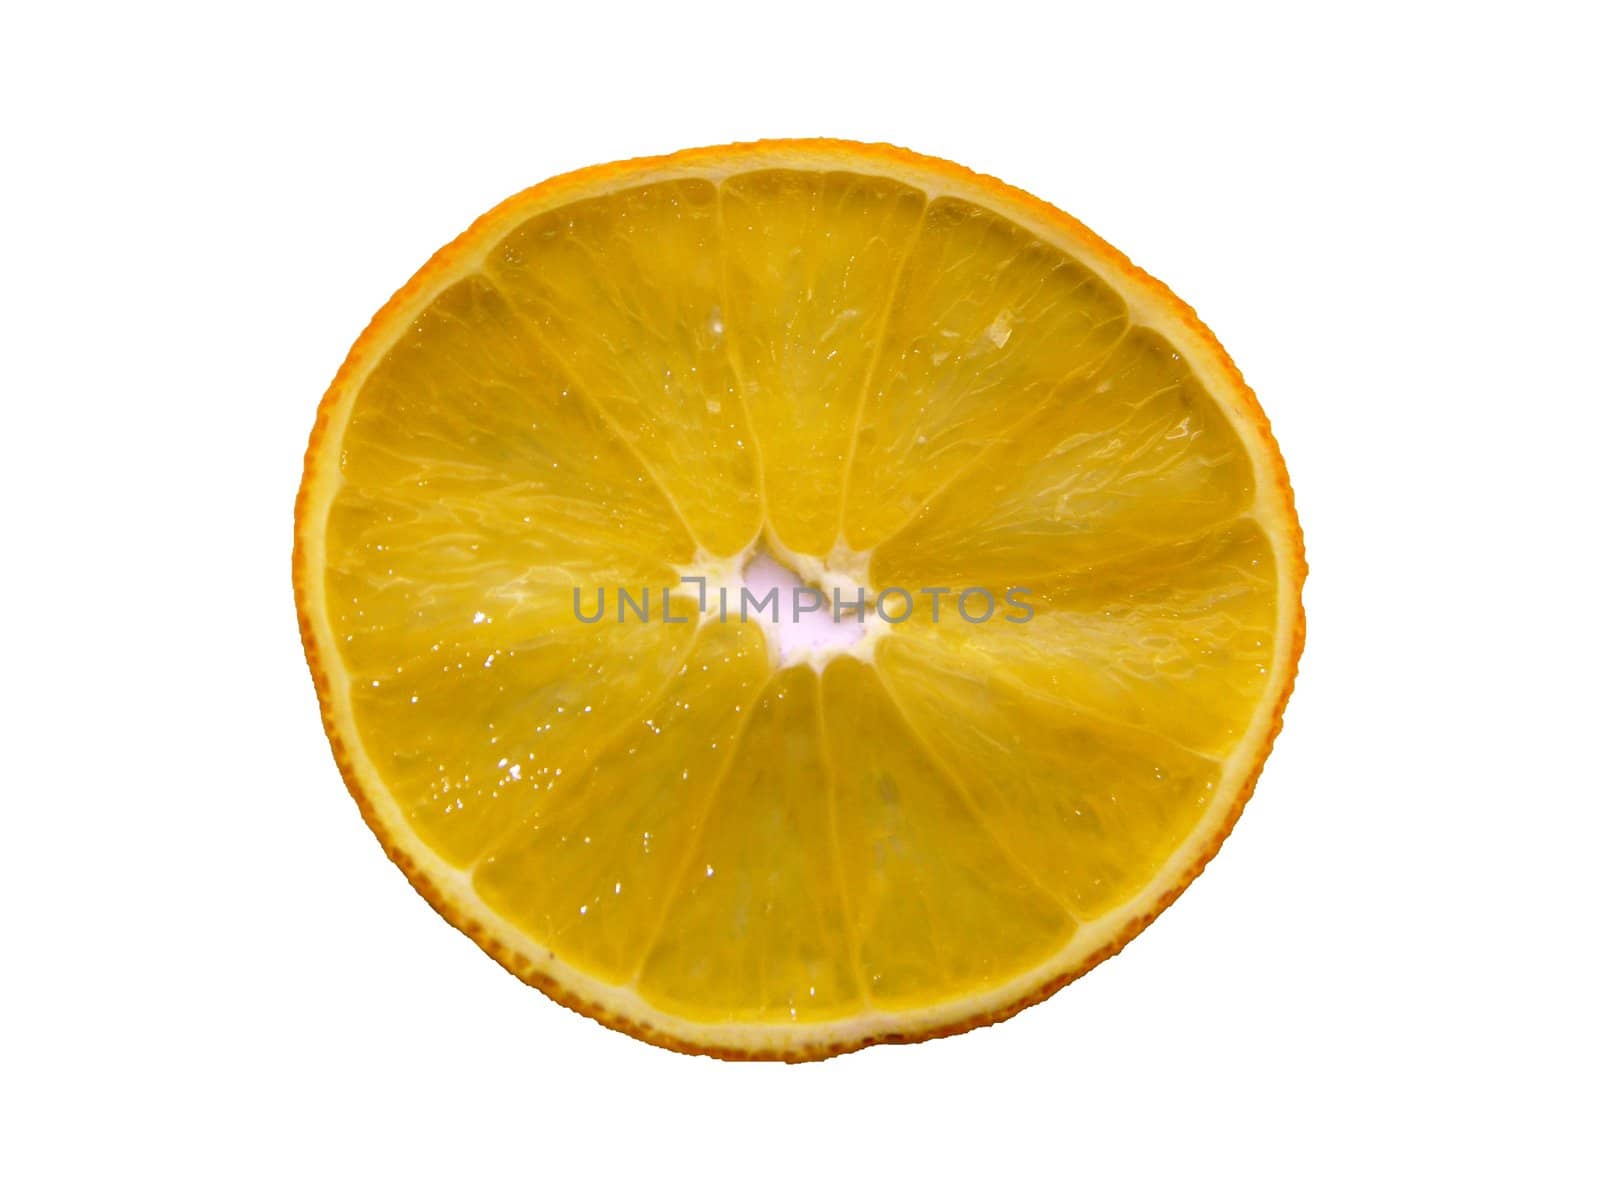 Photo of a slice of Orange. Provided free object.